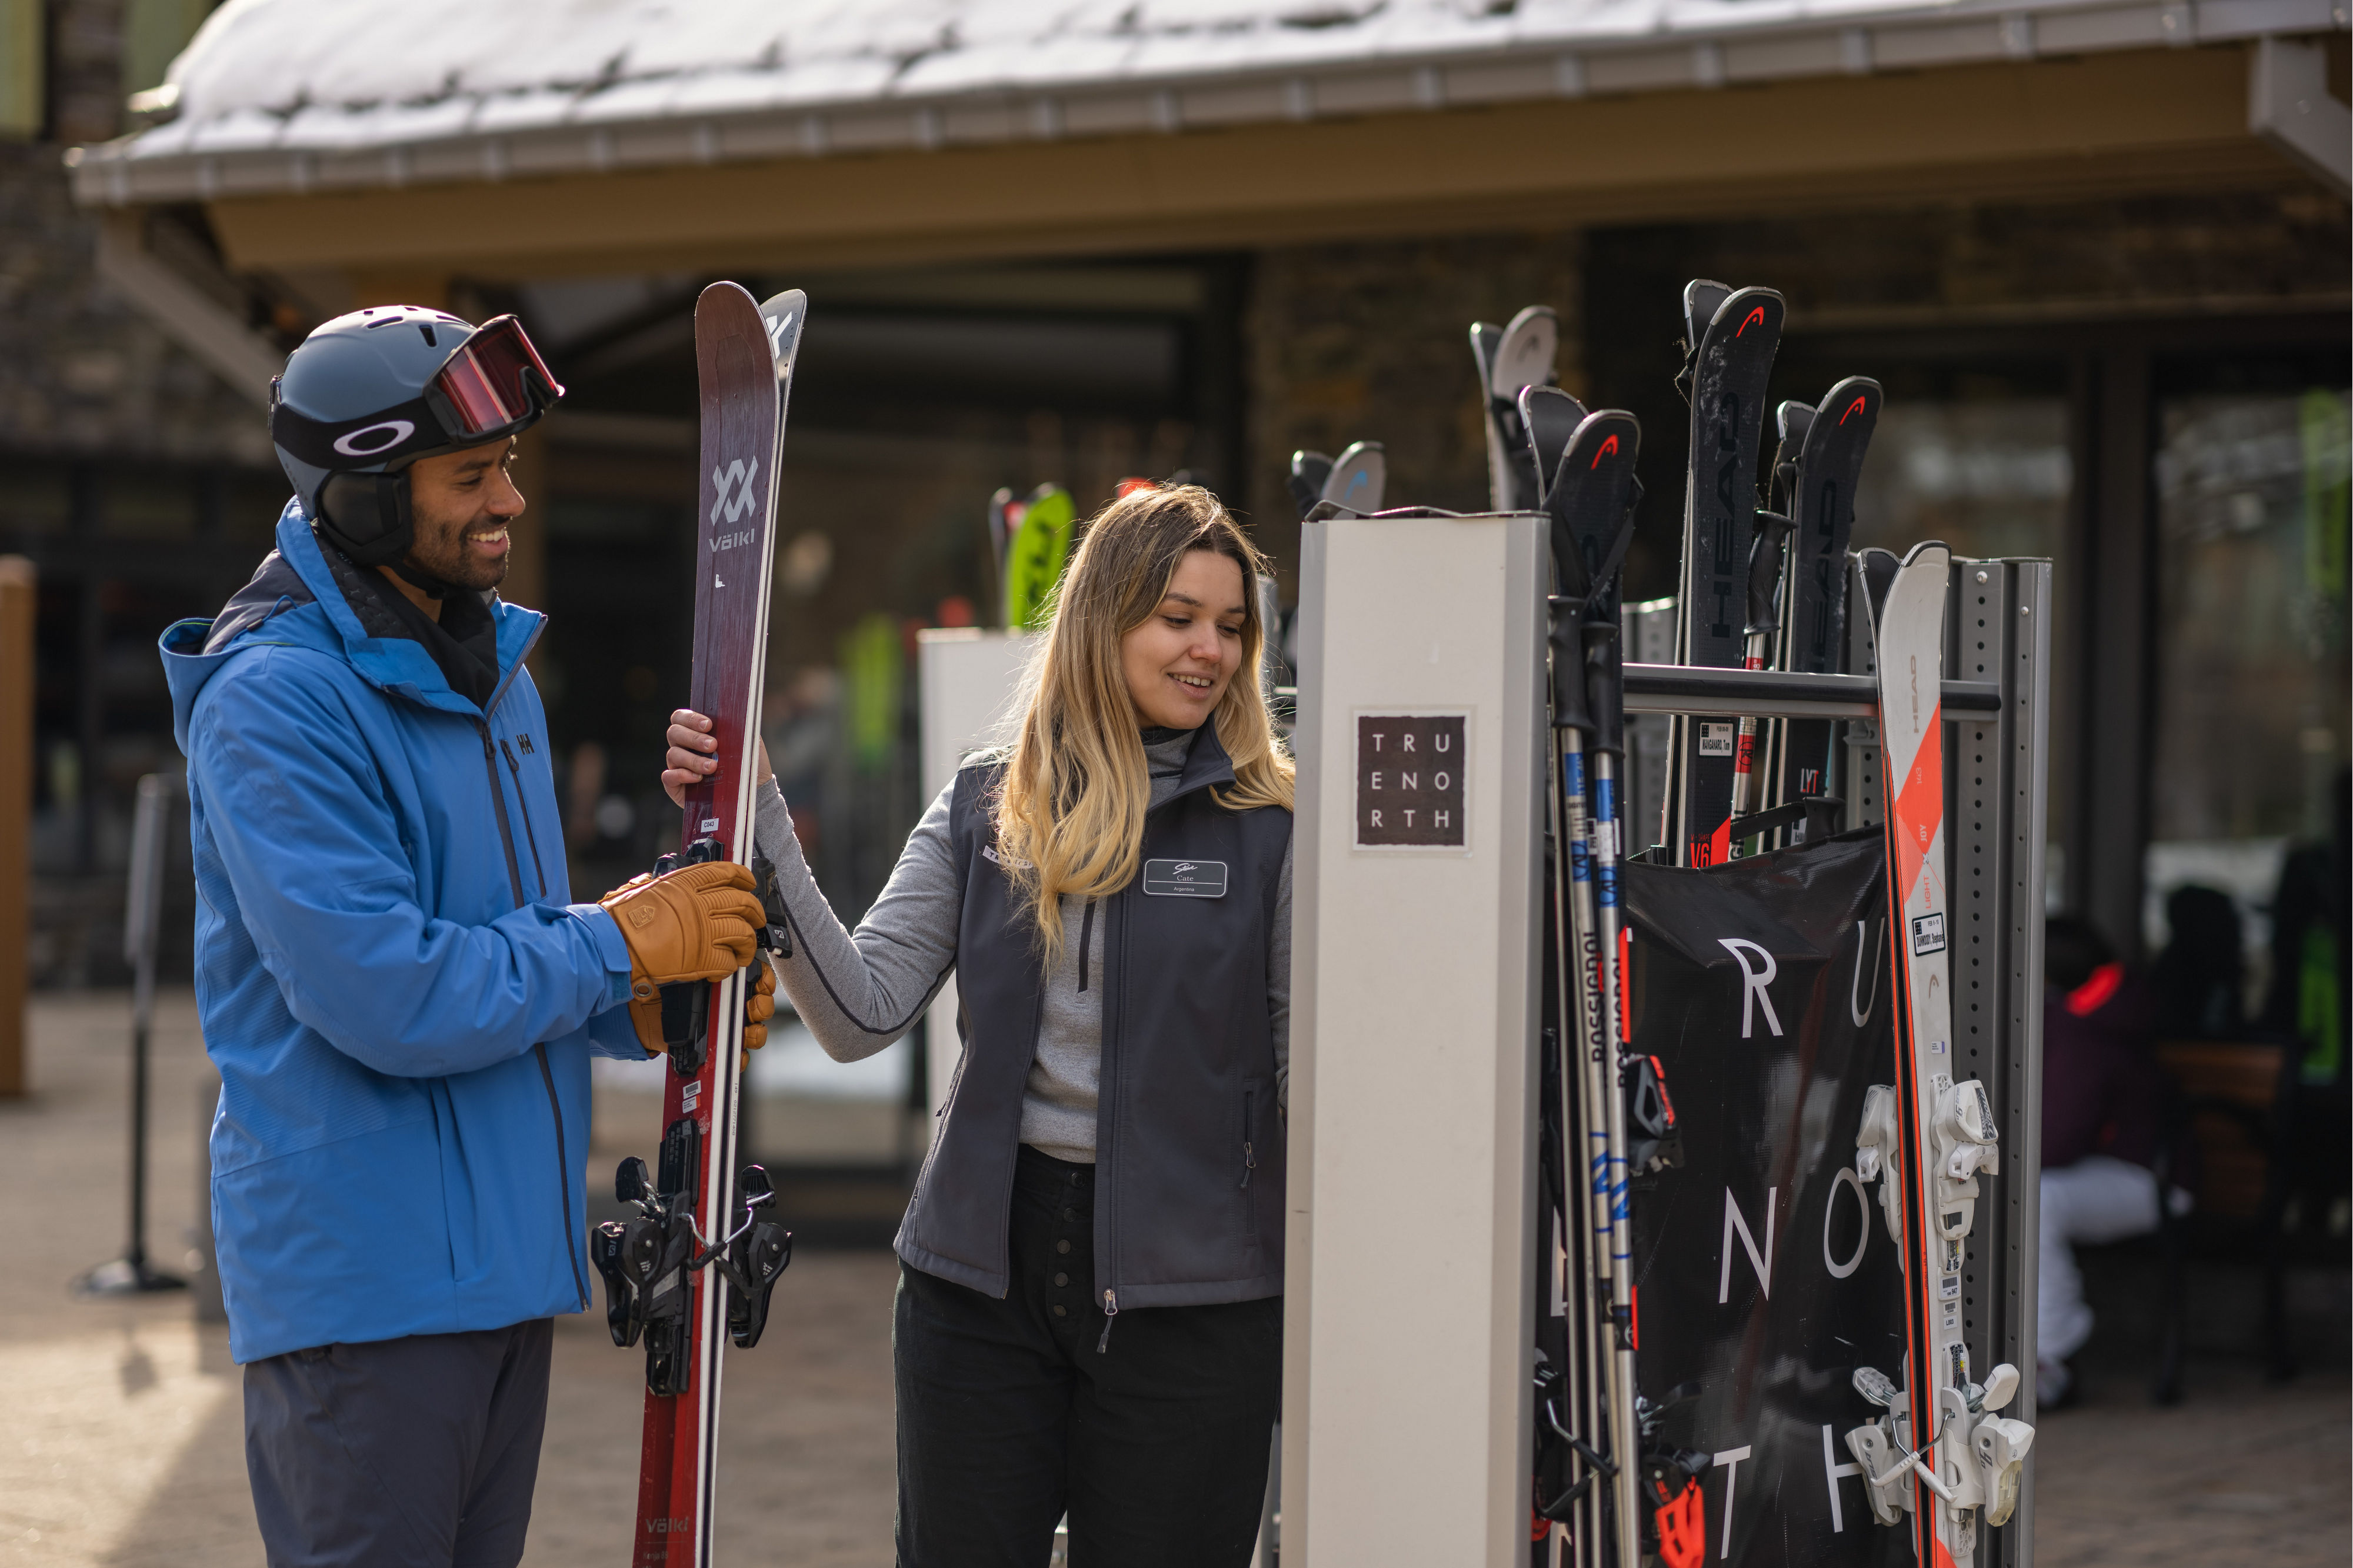 Resort Guest Picks Up Ski Equipment at Stowe